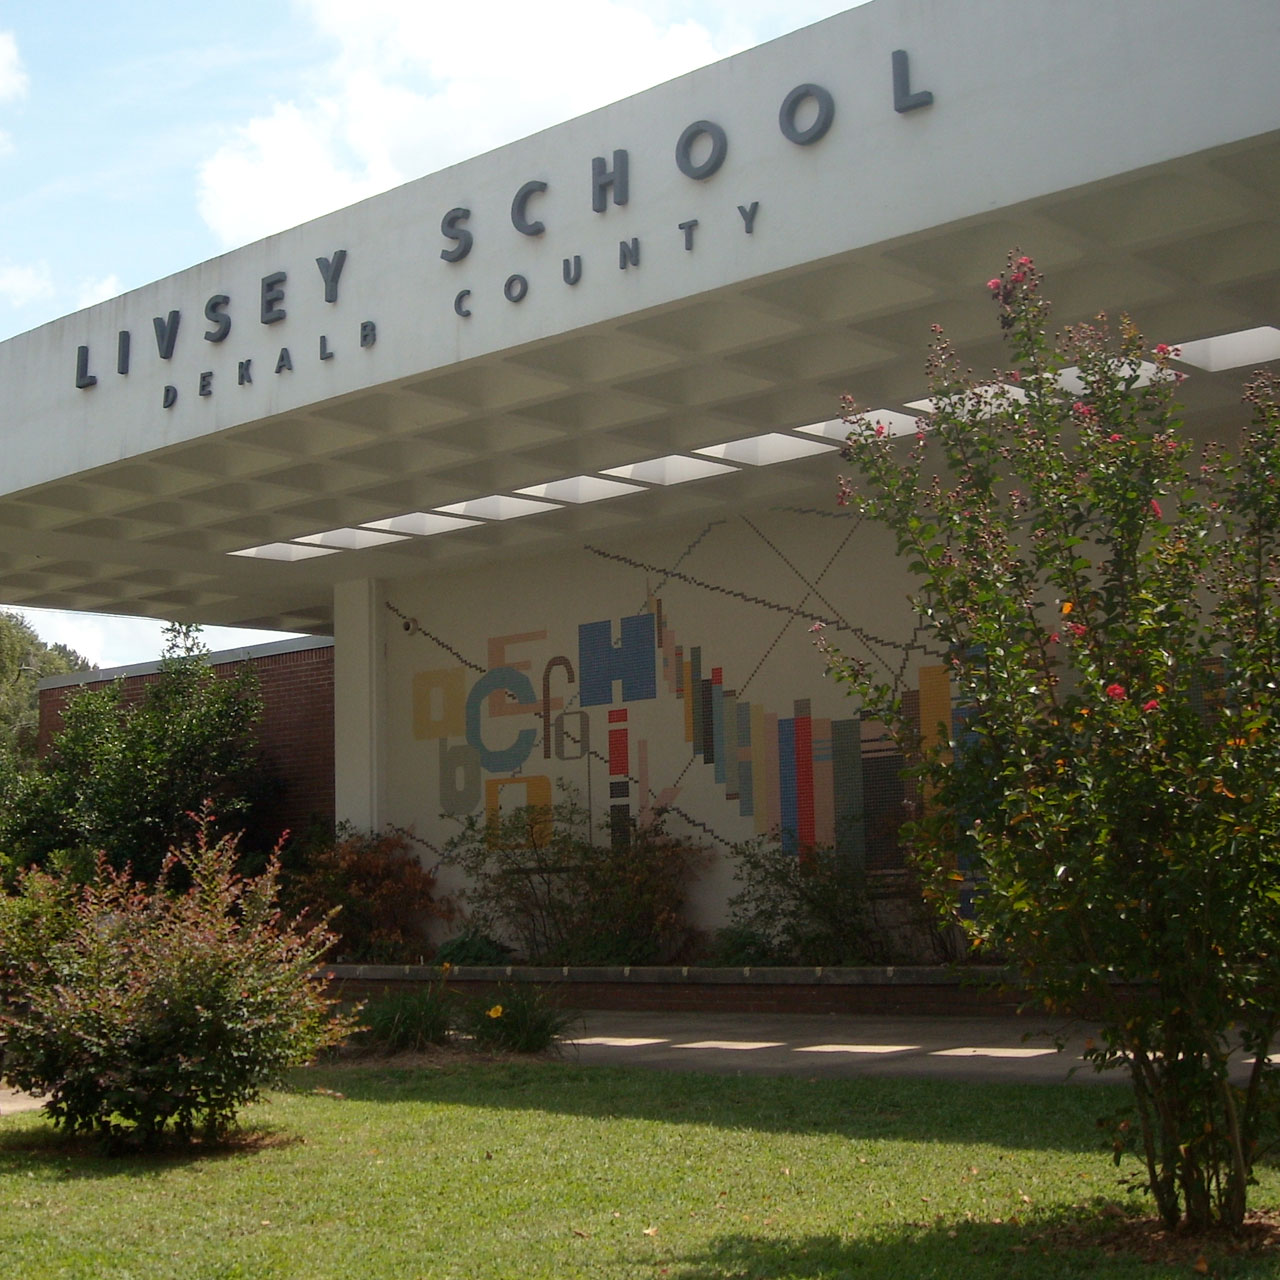 Livsey School exterior